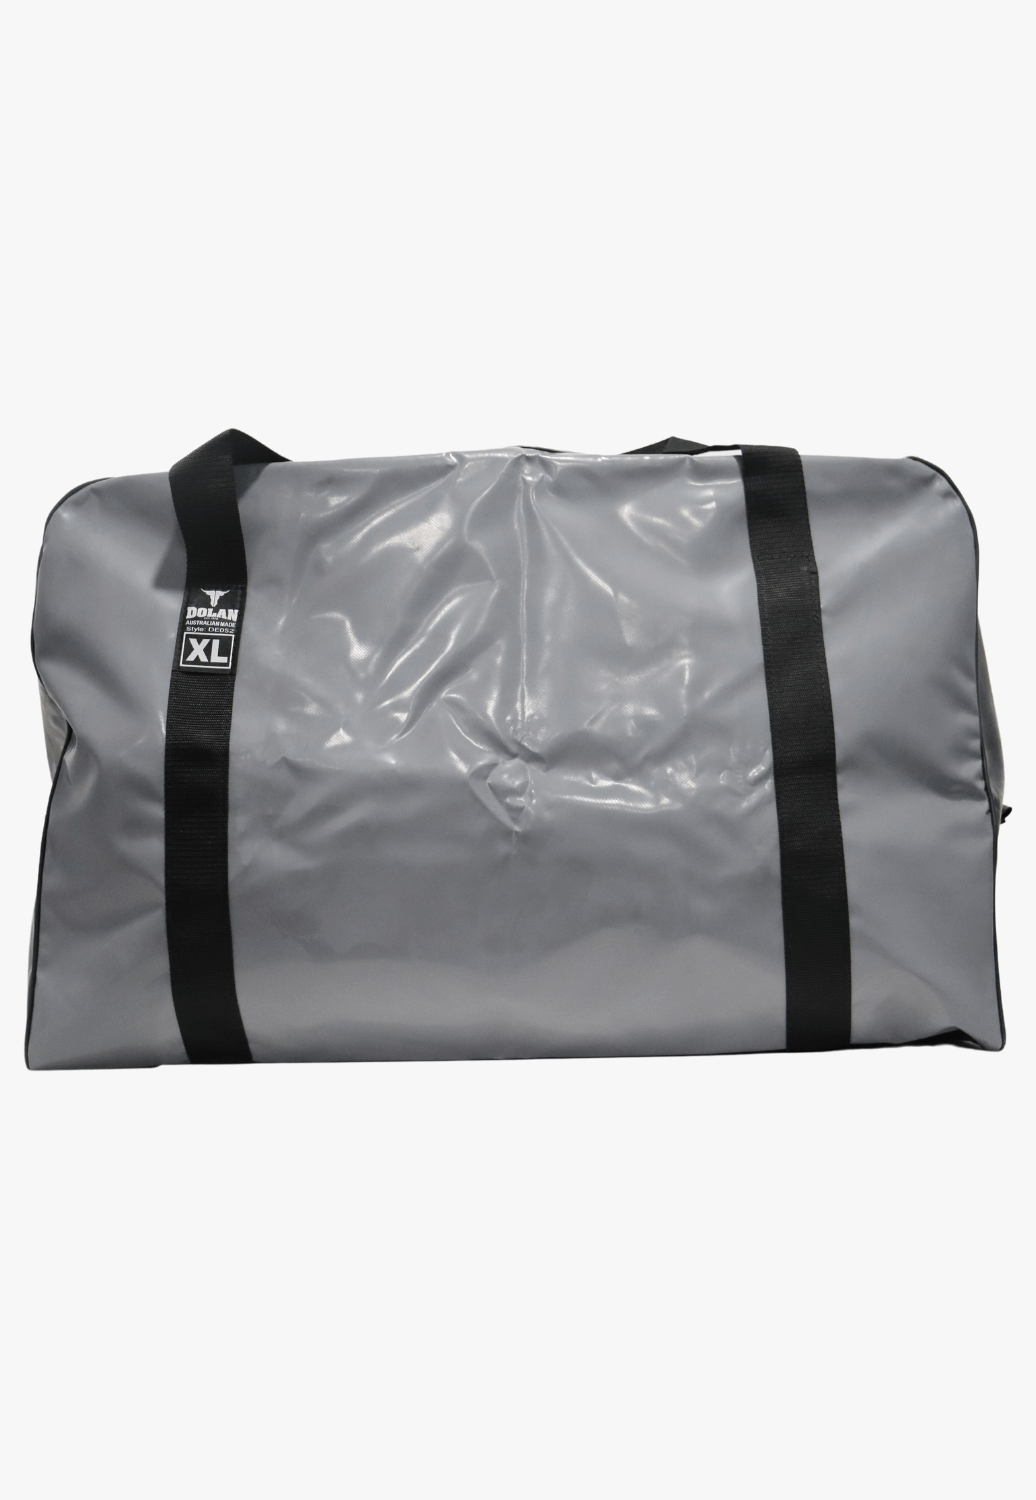 Dolan Extra Large Gear Bag